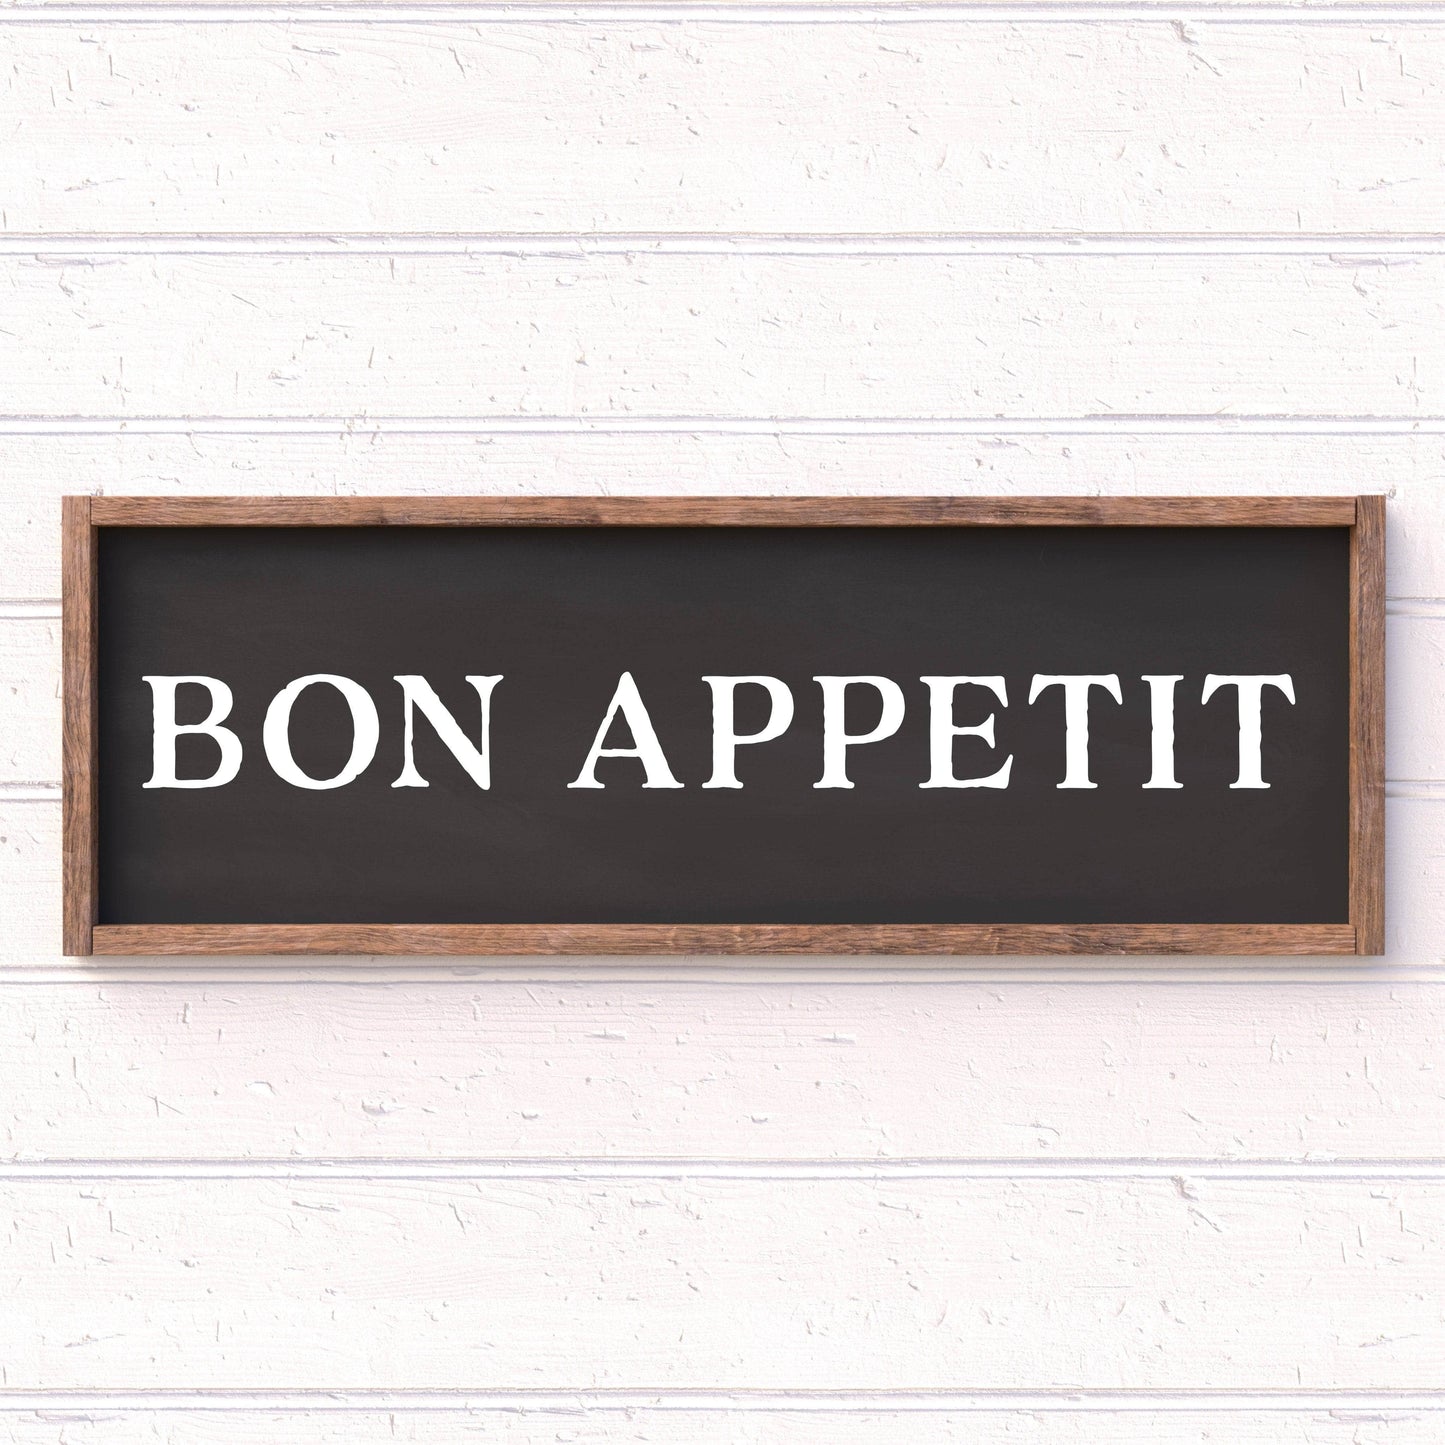 Bon Appetit framed kitchen wood sign, kitchen decor, home decor